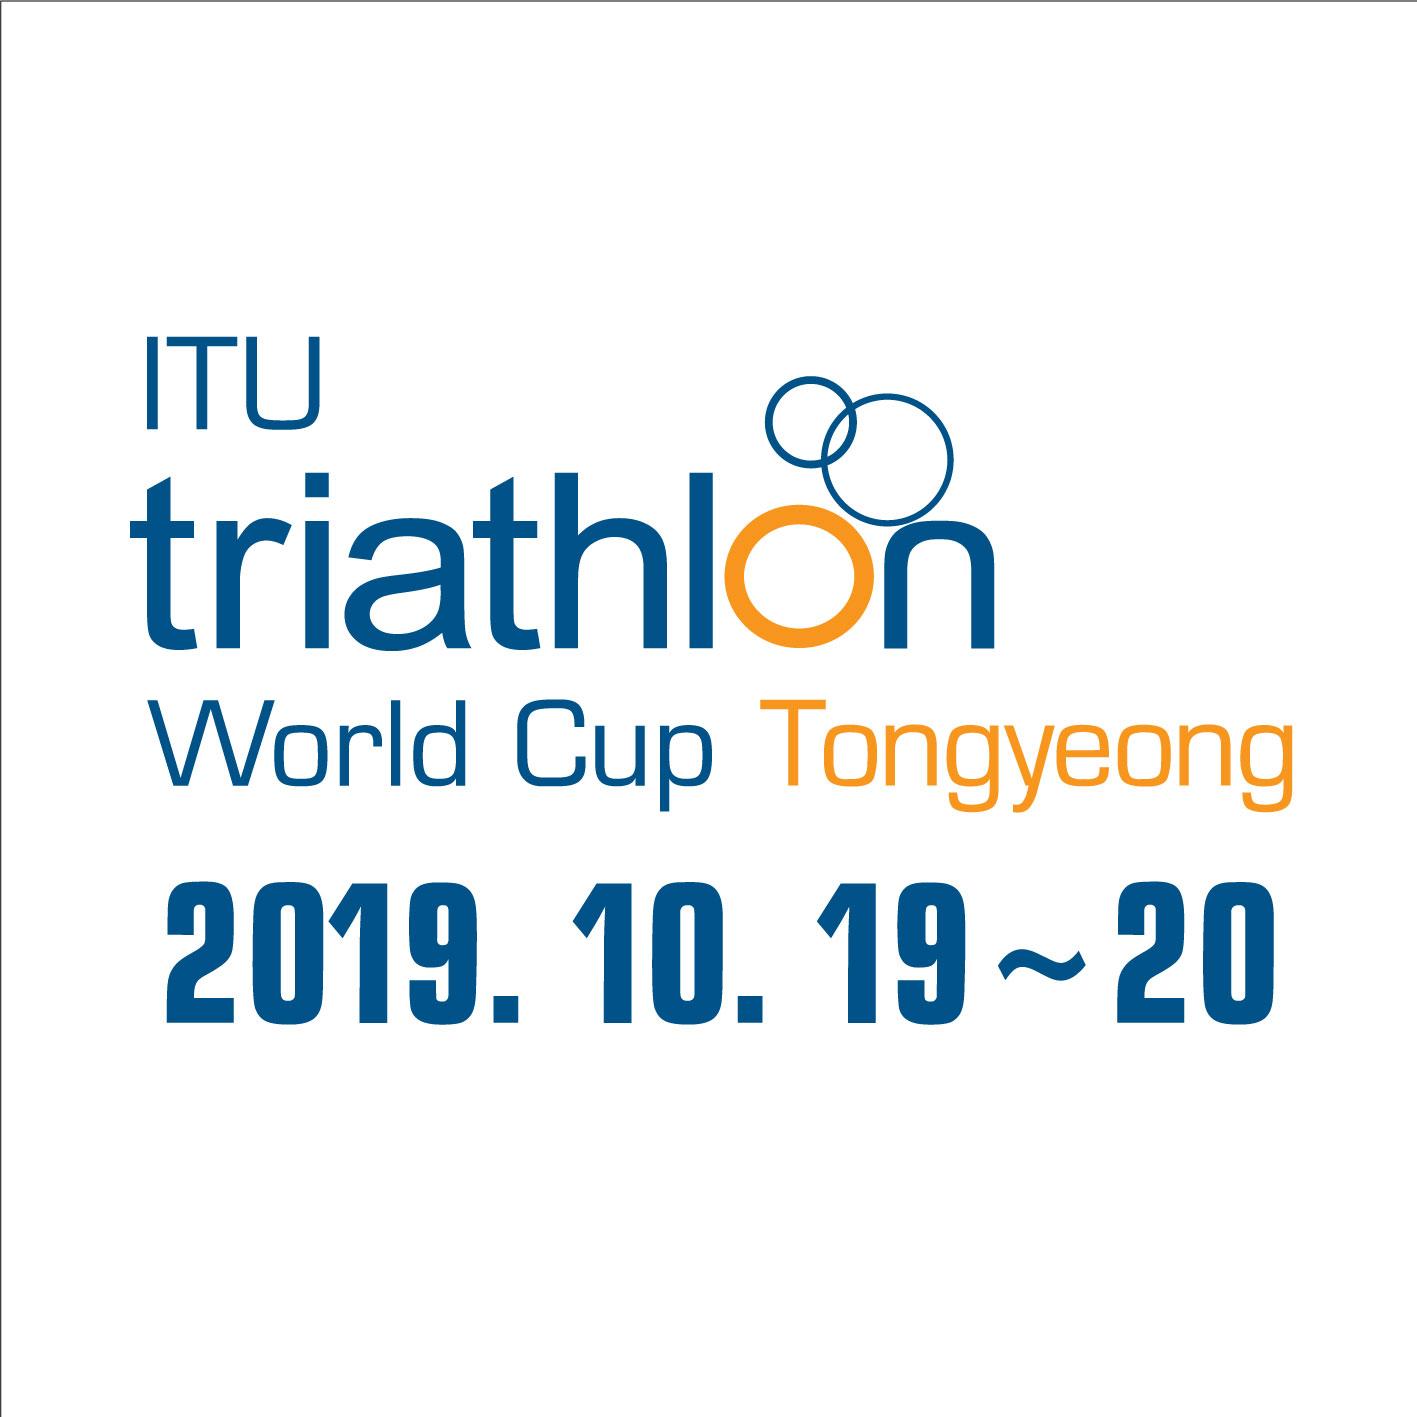 Tongyeong ITU Triathlon World Cup Logo